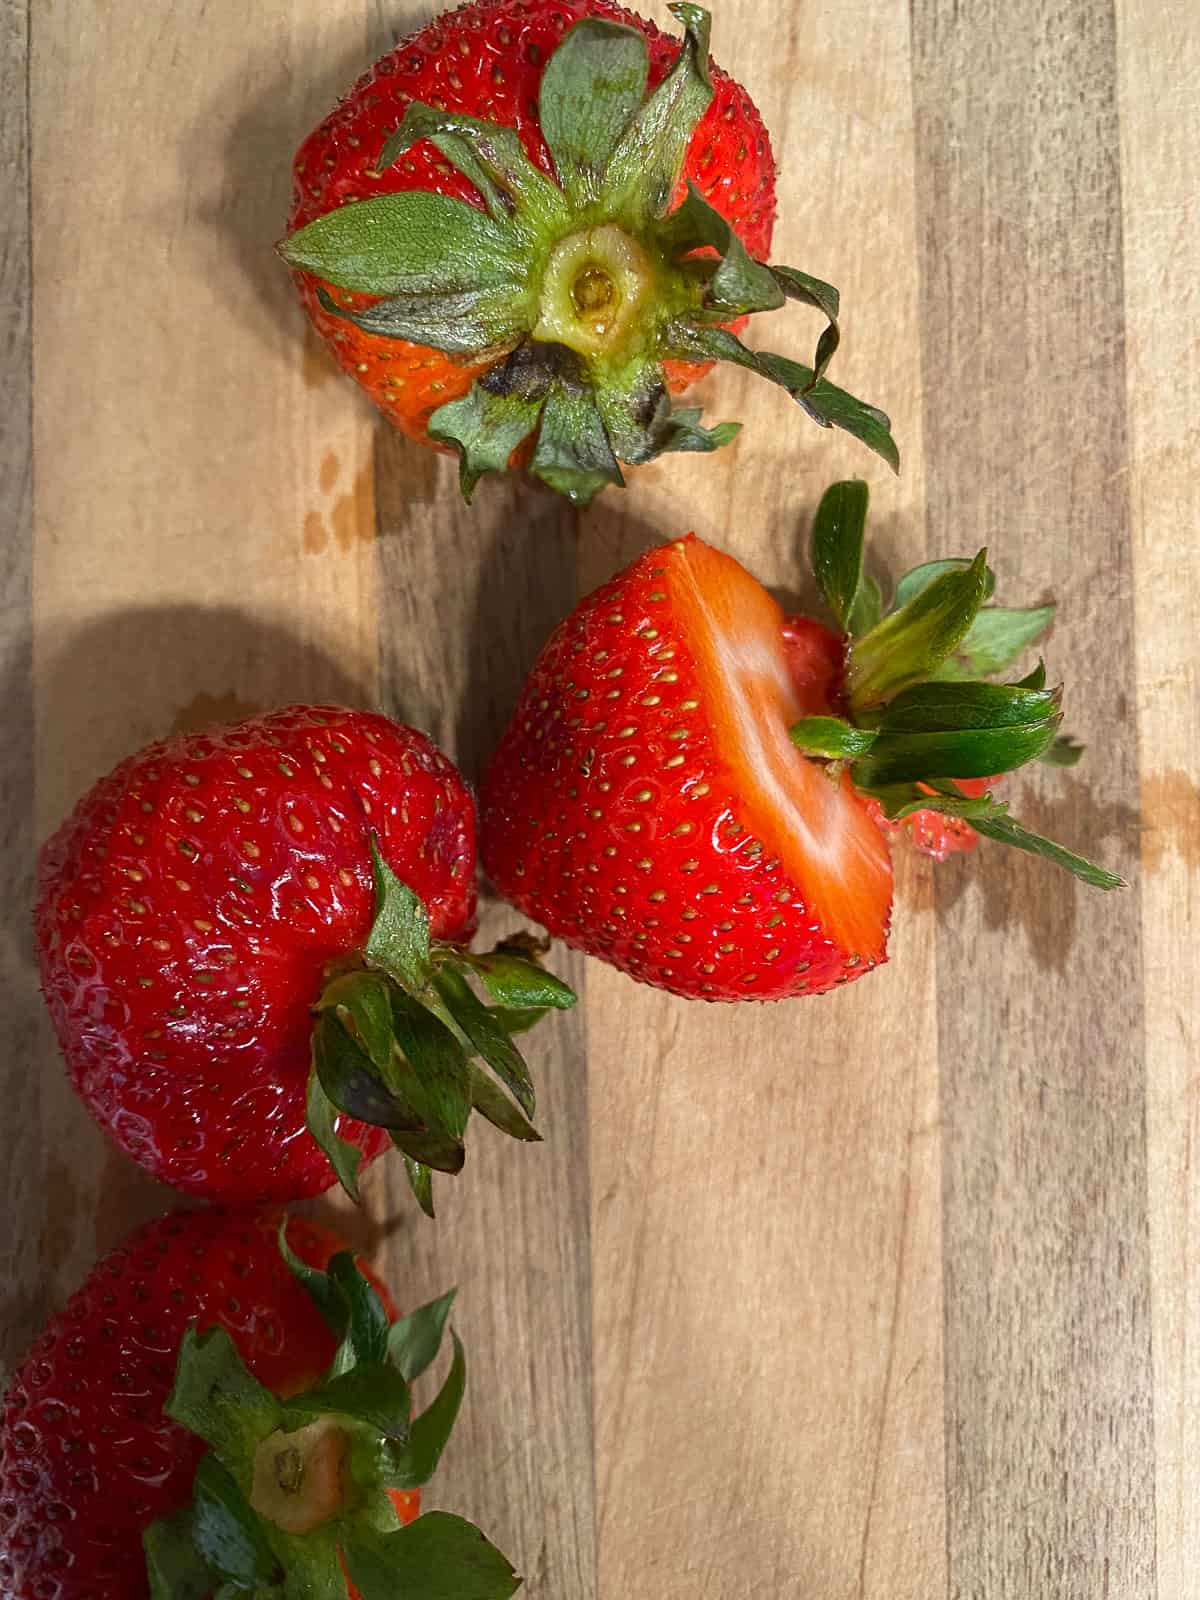 process shot showing cut strawberries on a cutting board